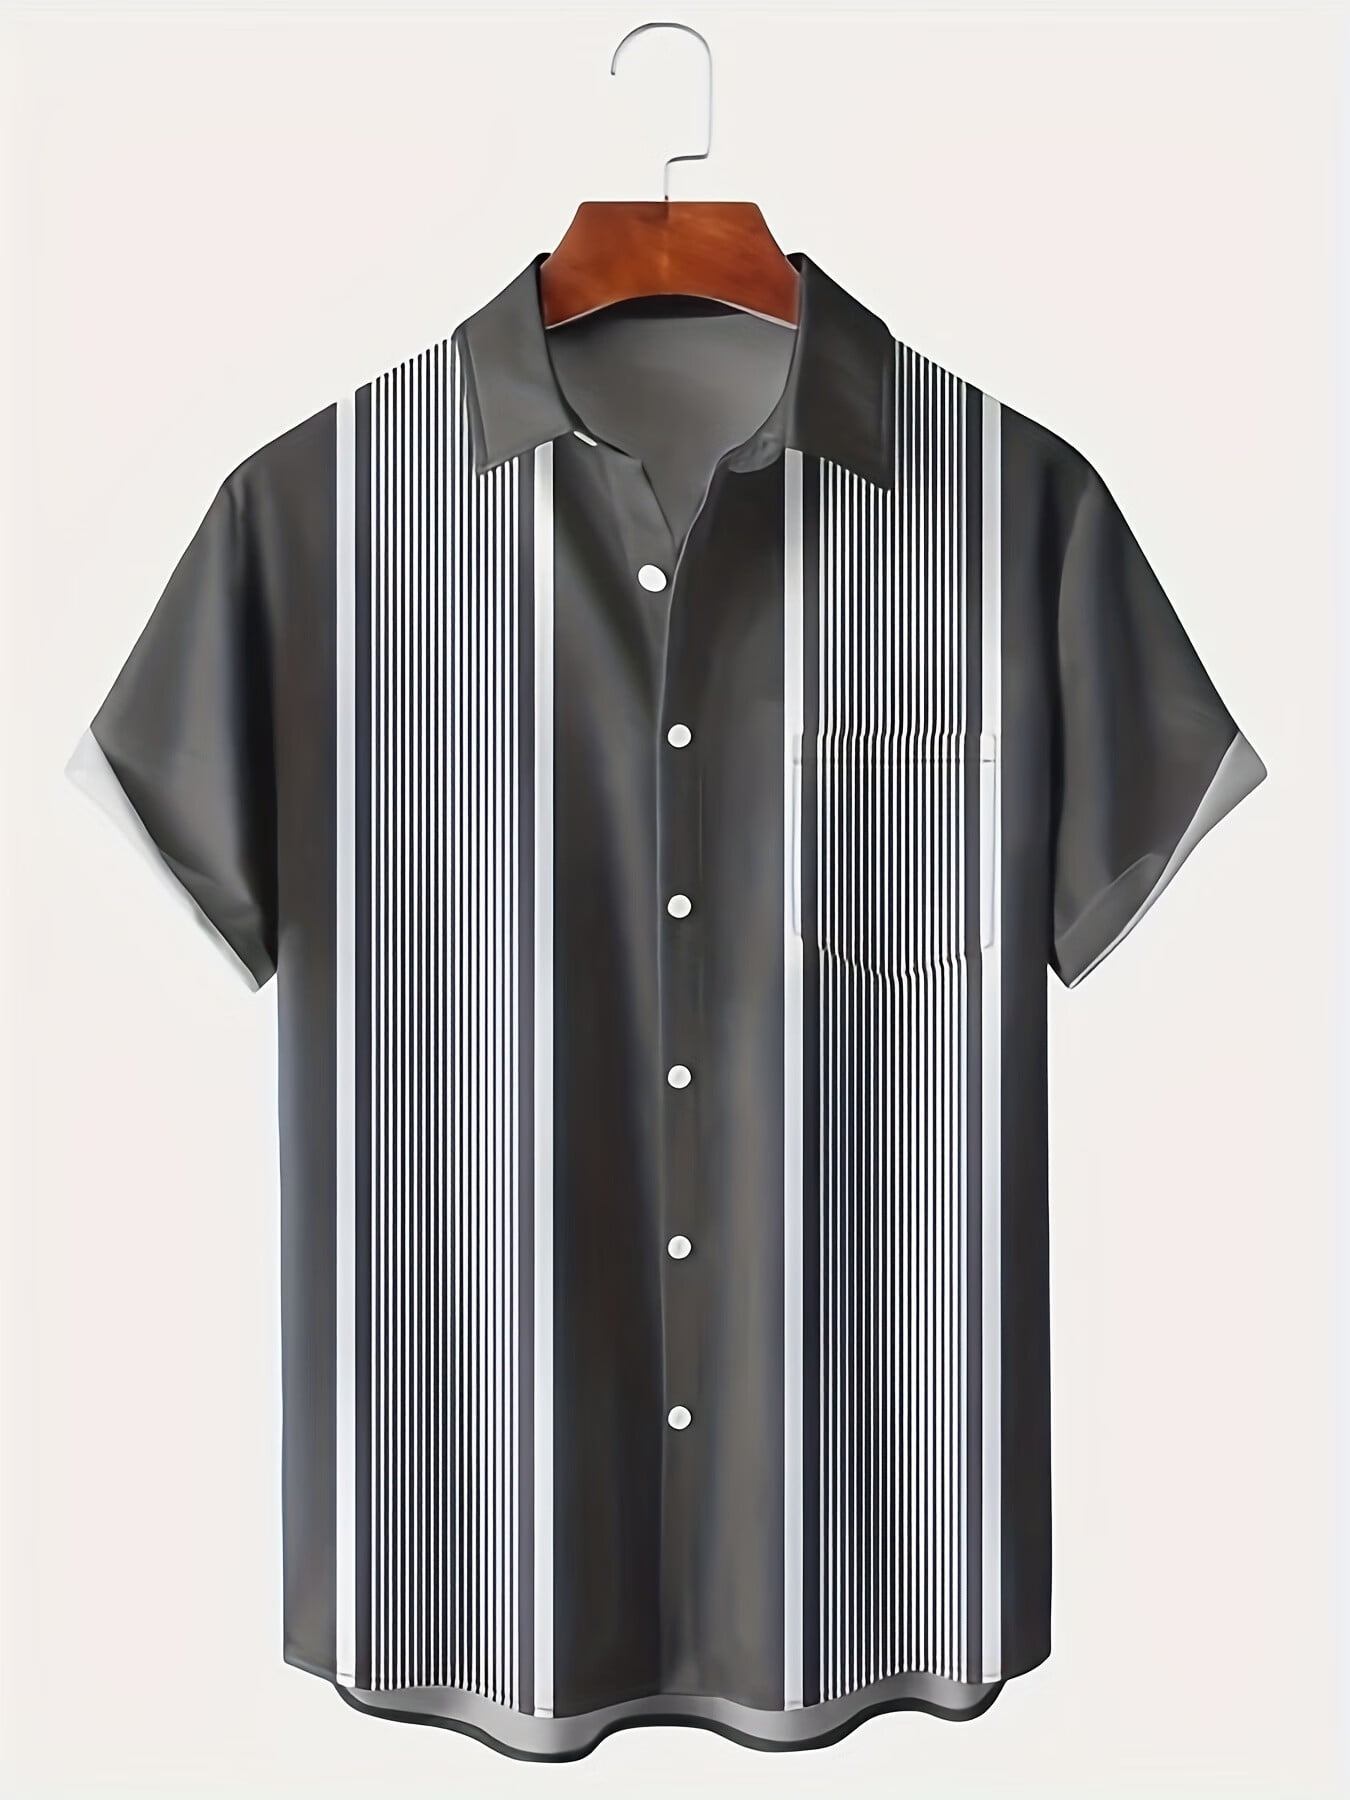 ROYAURA Men's Vintage Bowling Shirt Short Sleeve Button Down Summer ...